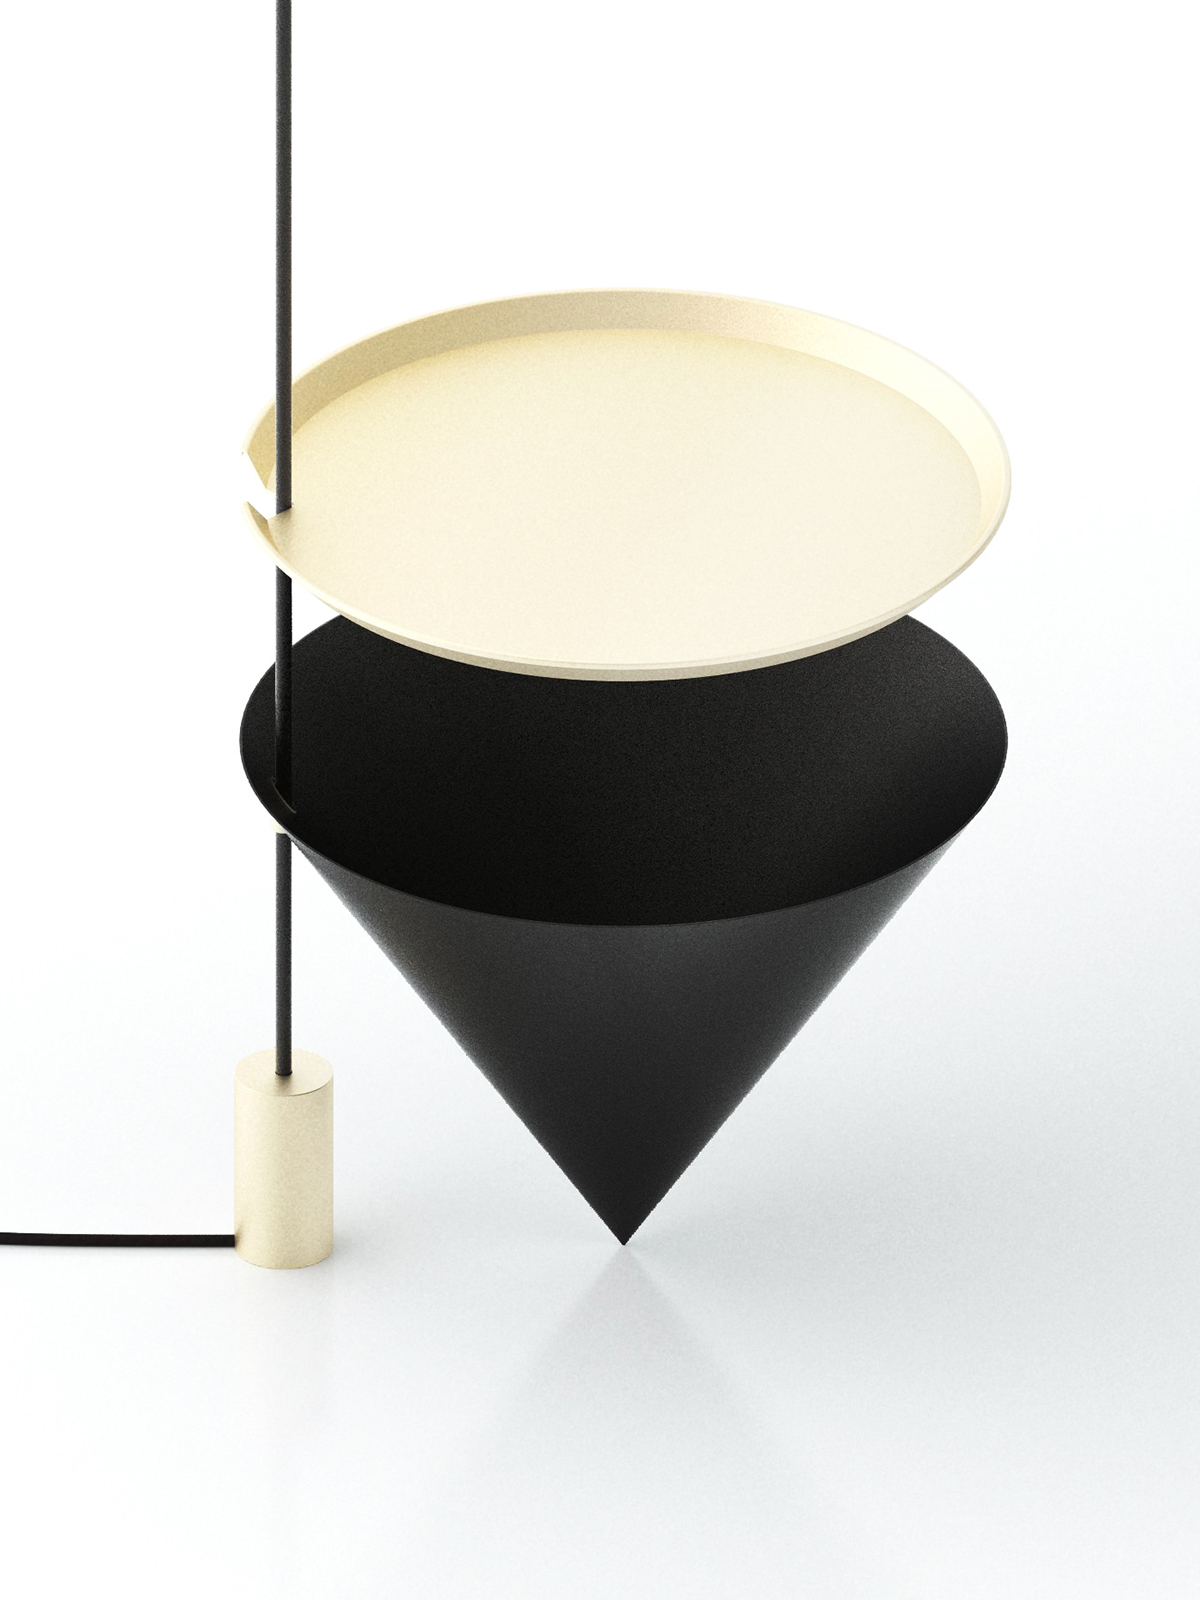 light table lampe table d'appoint Laiton plateau vide poche brass black metal